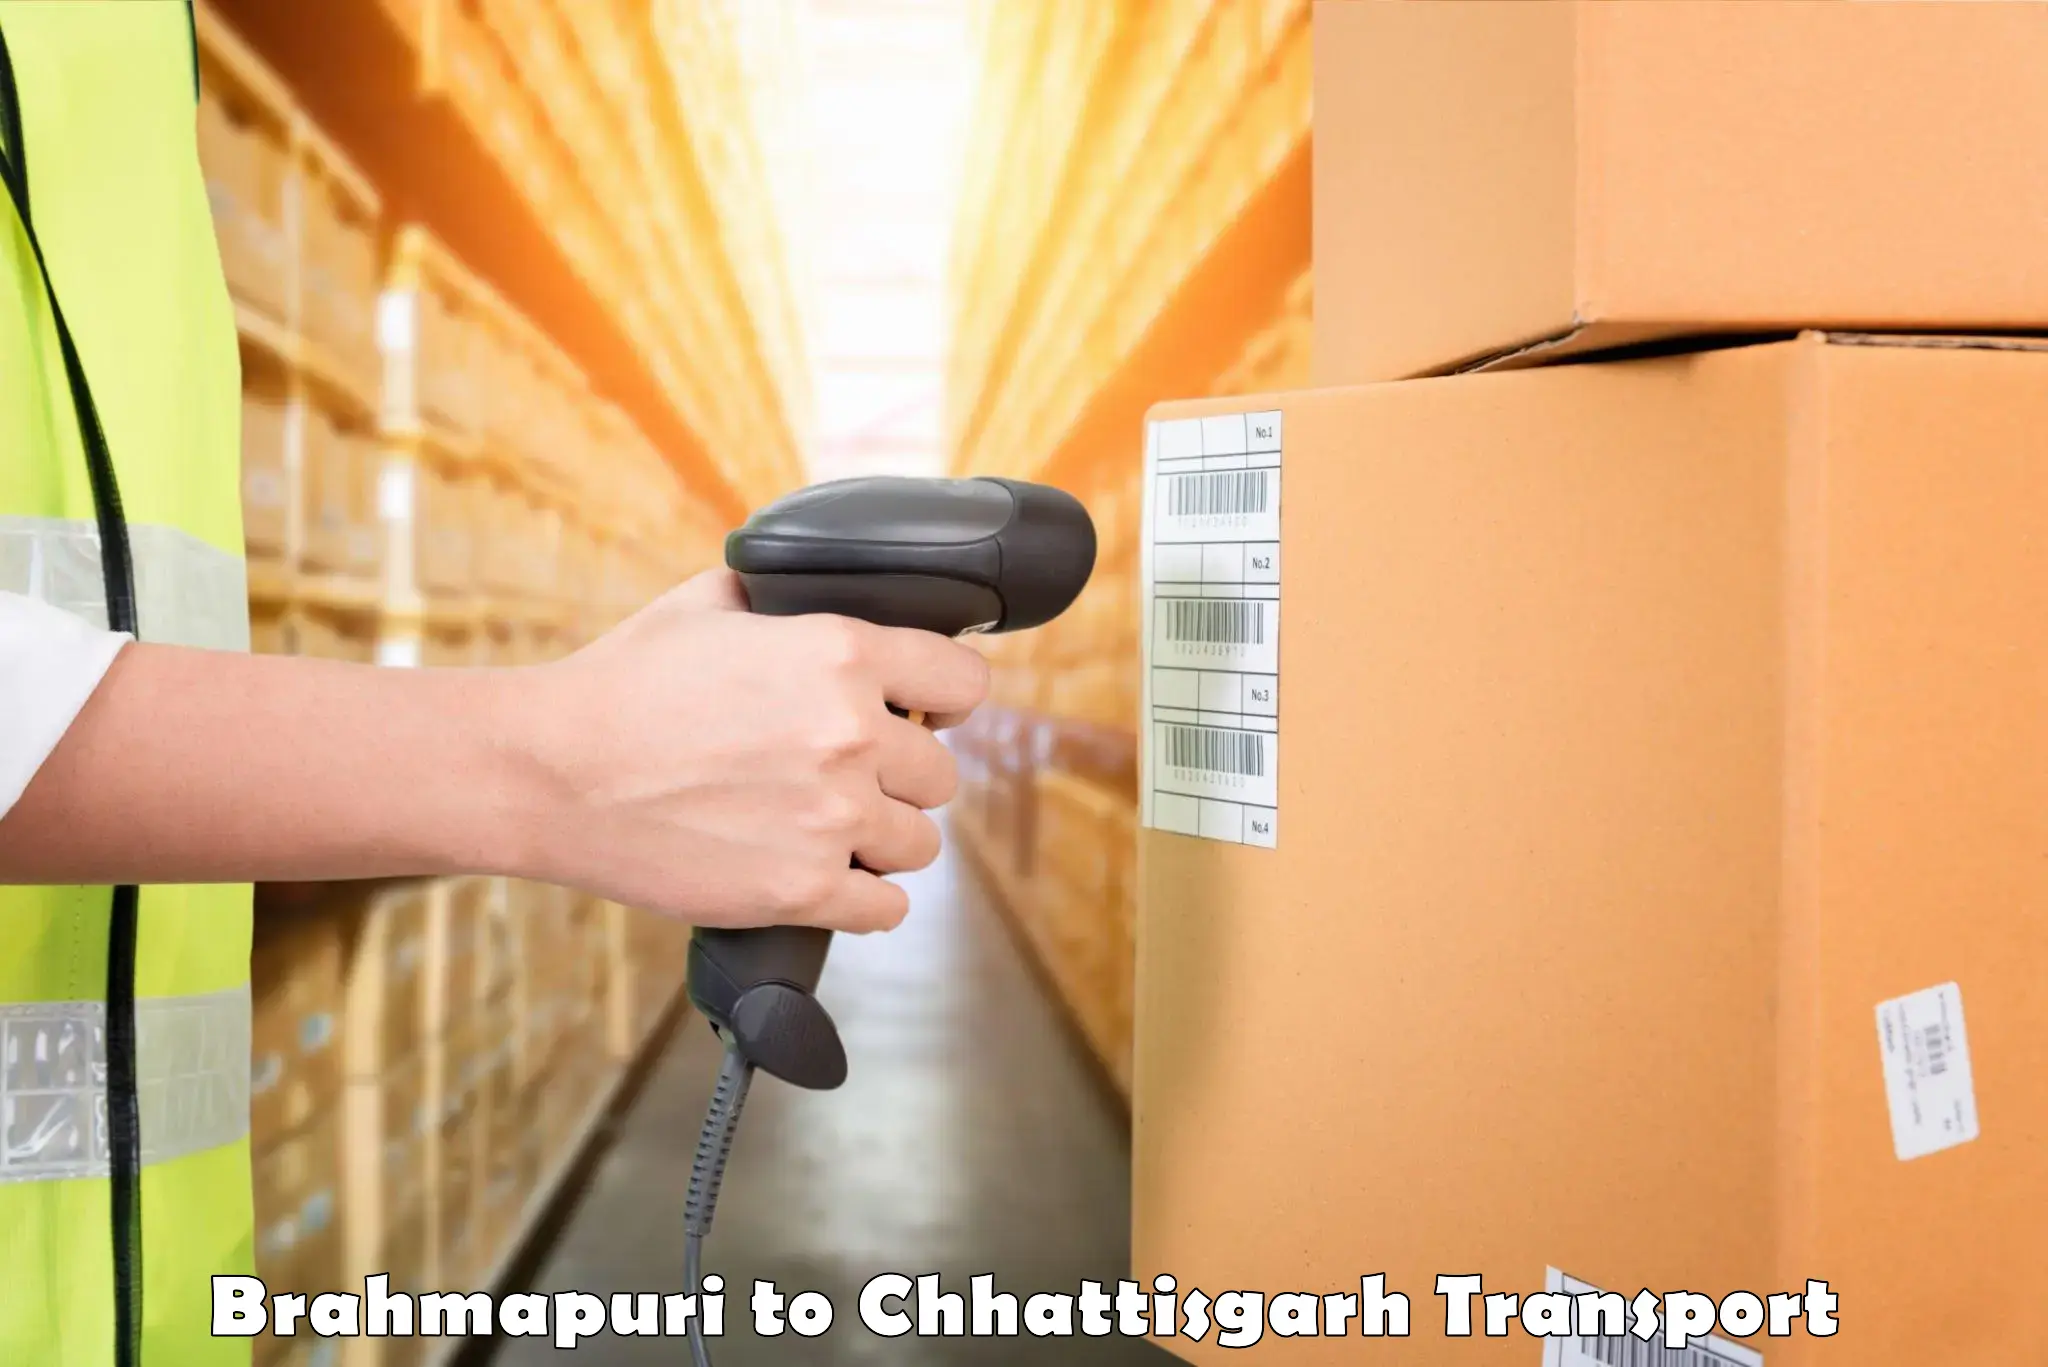 Truck transport companies in India Brahmapuri to Bhatgaon